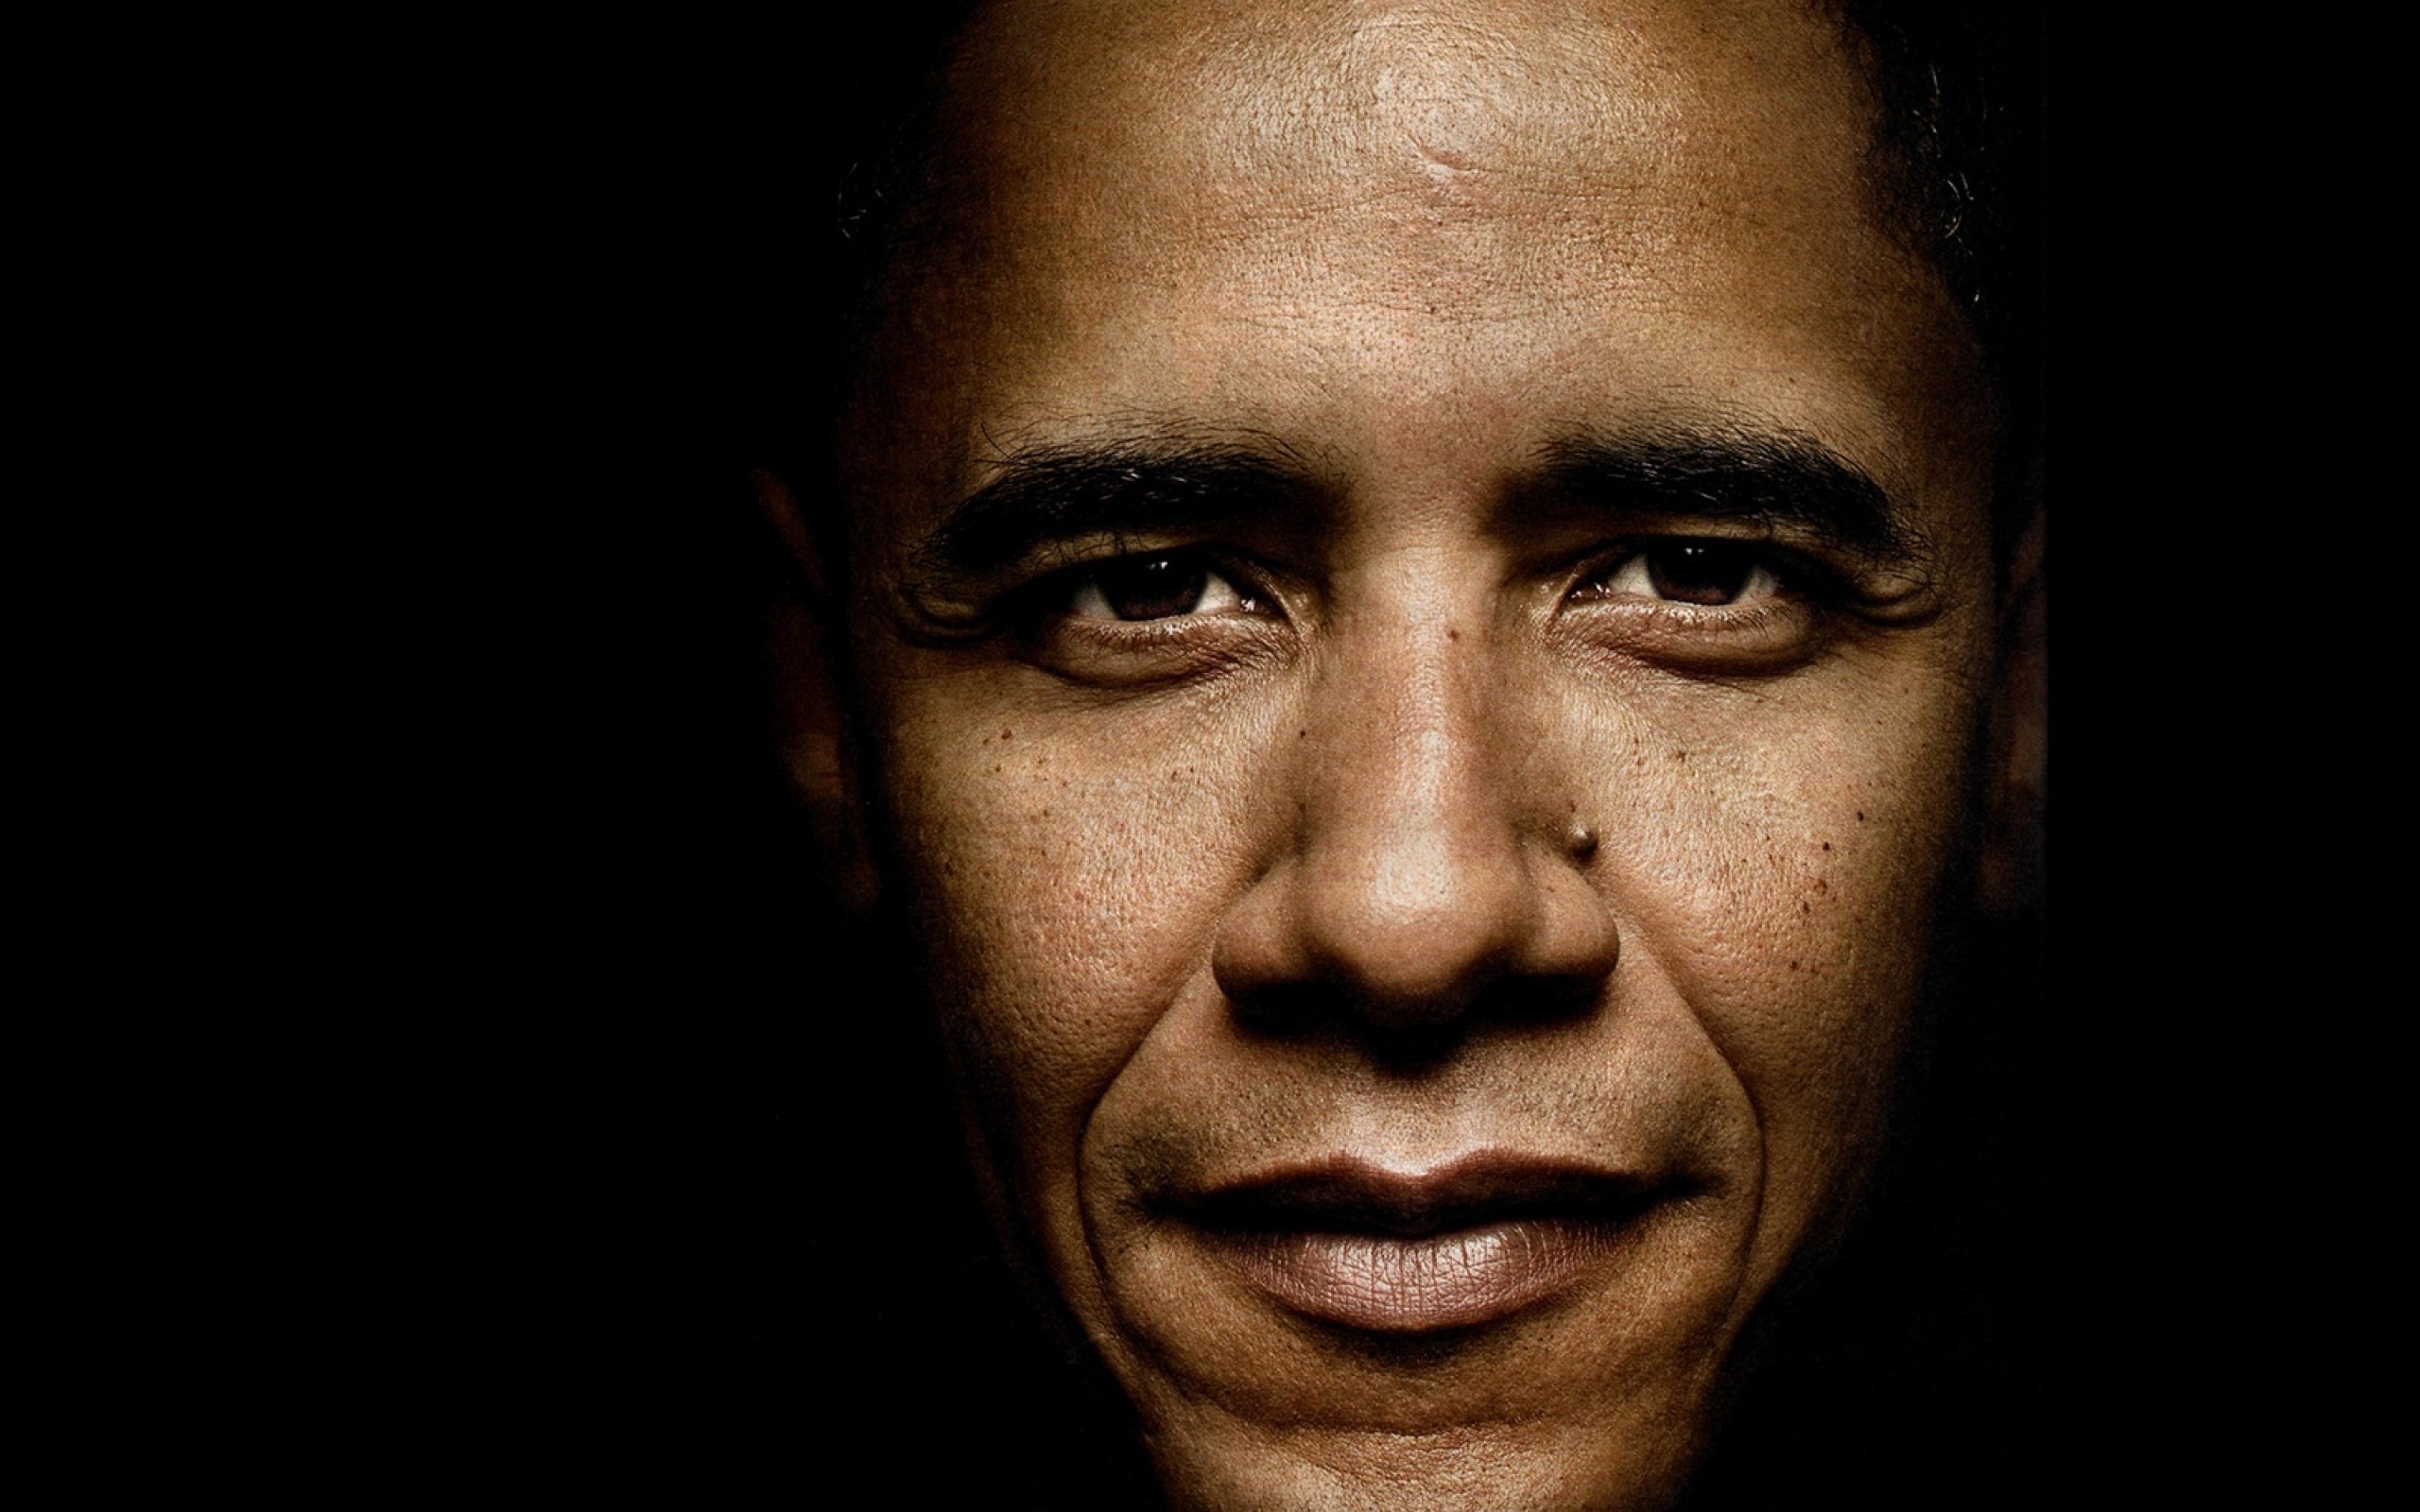 Wallpaper Of Barack Obama S Face Up Close Paperpull